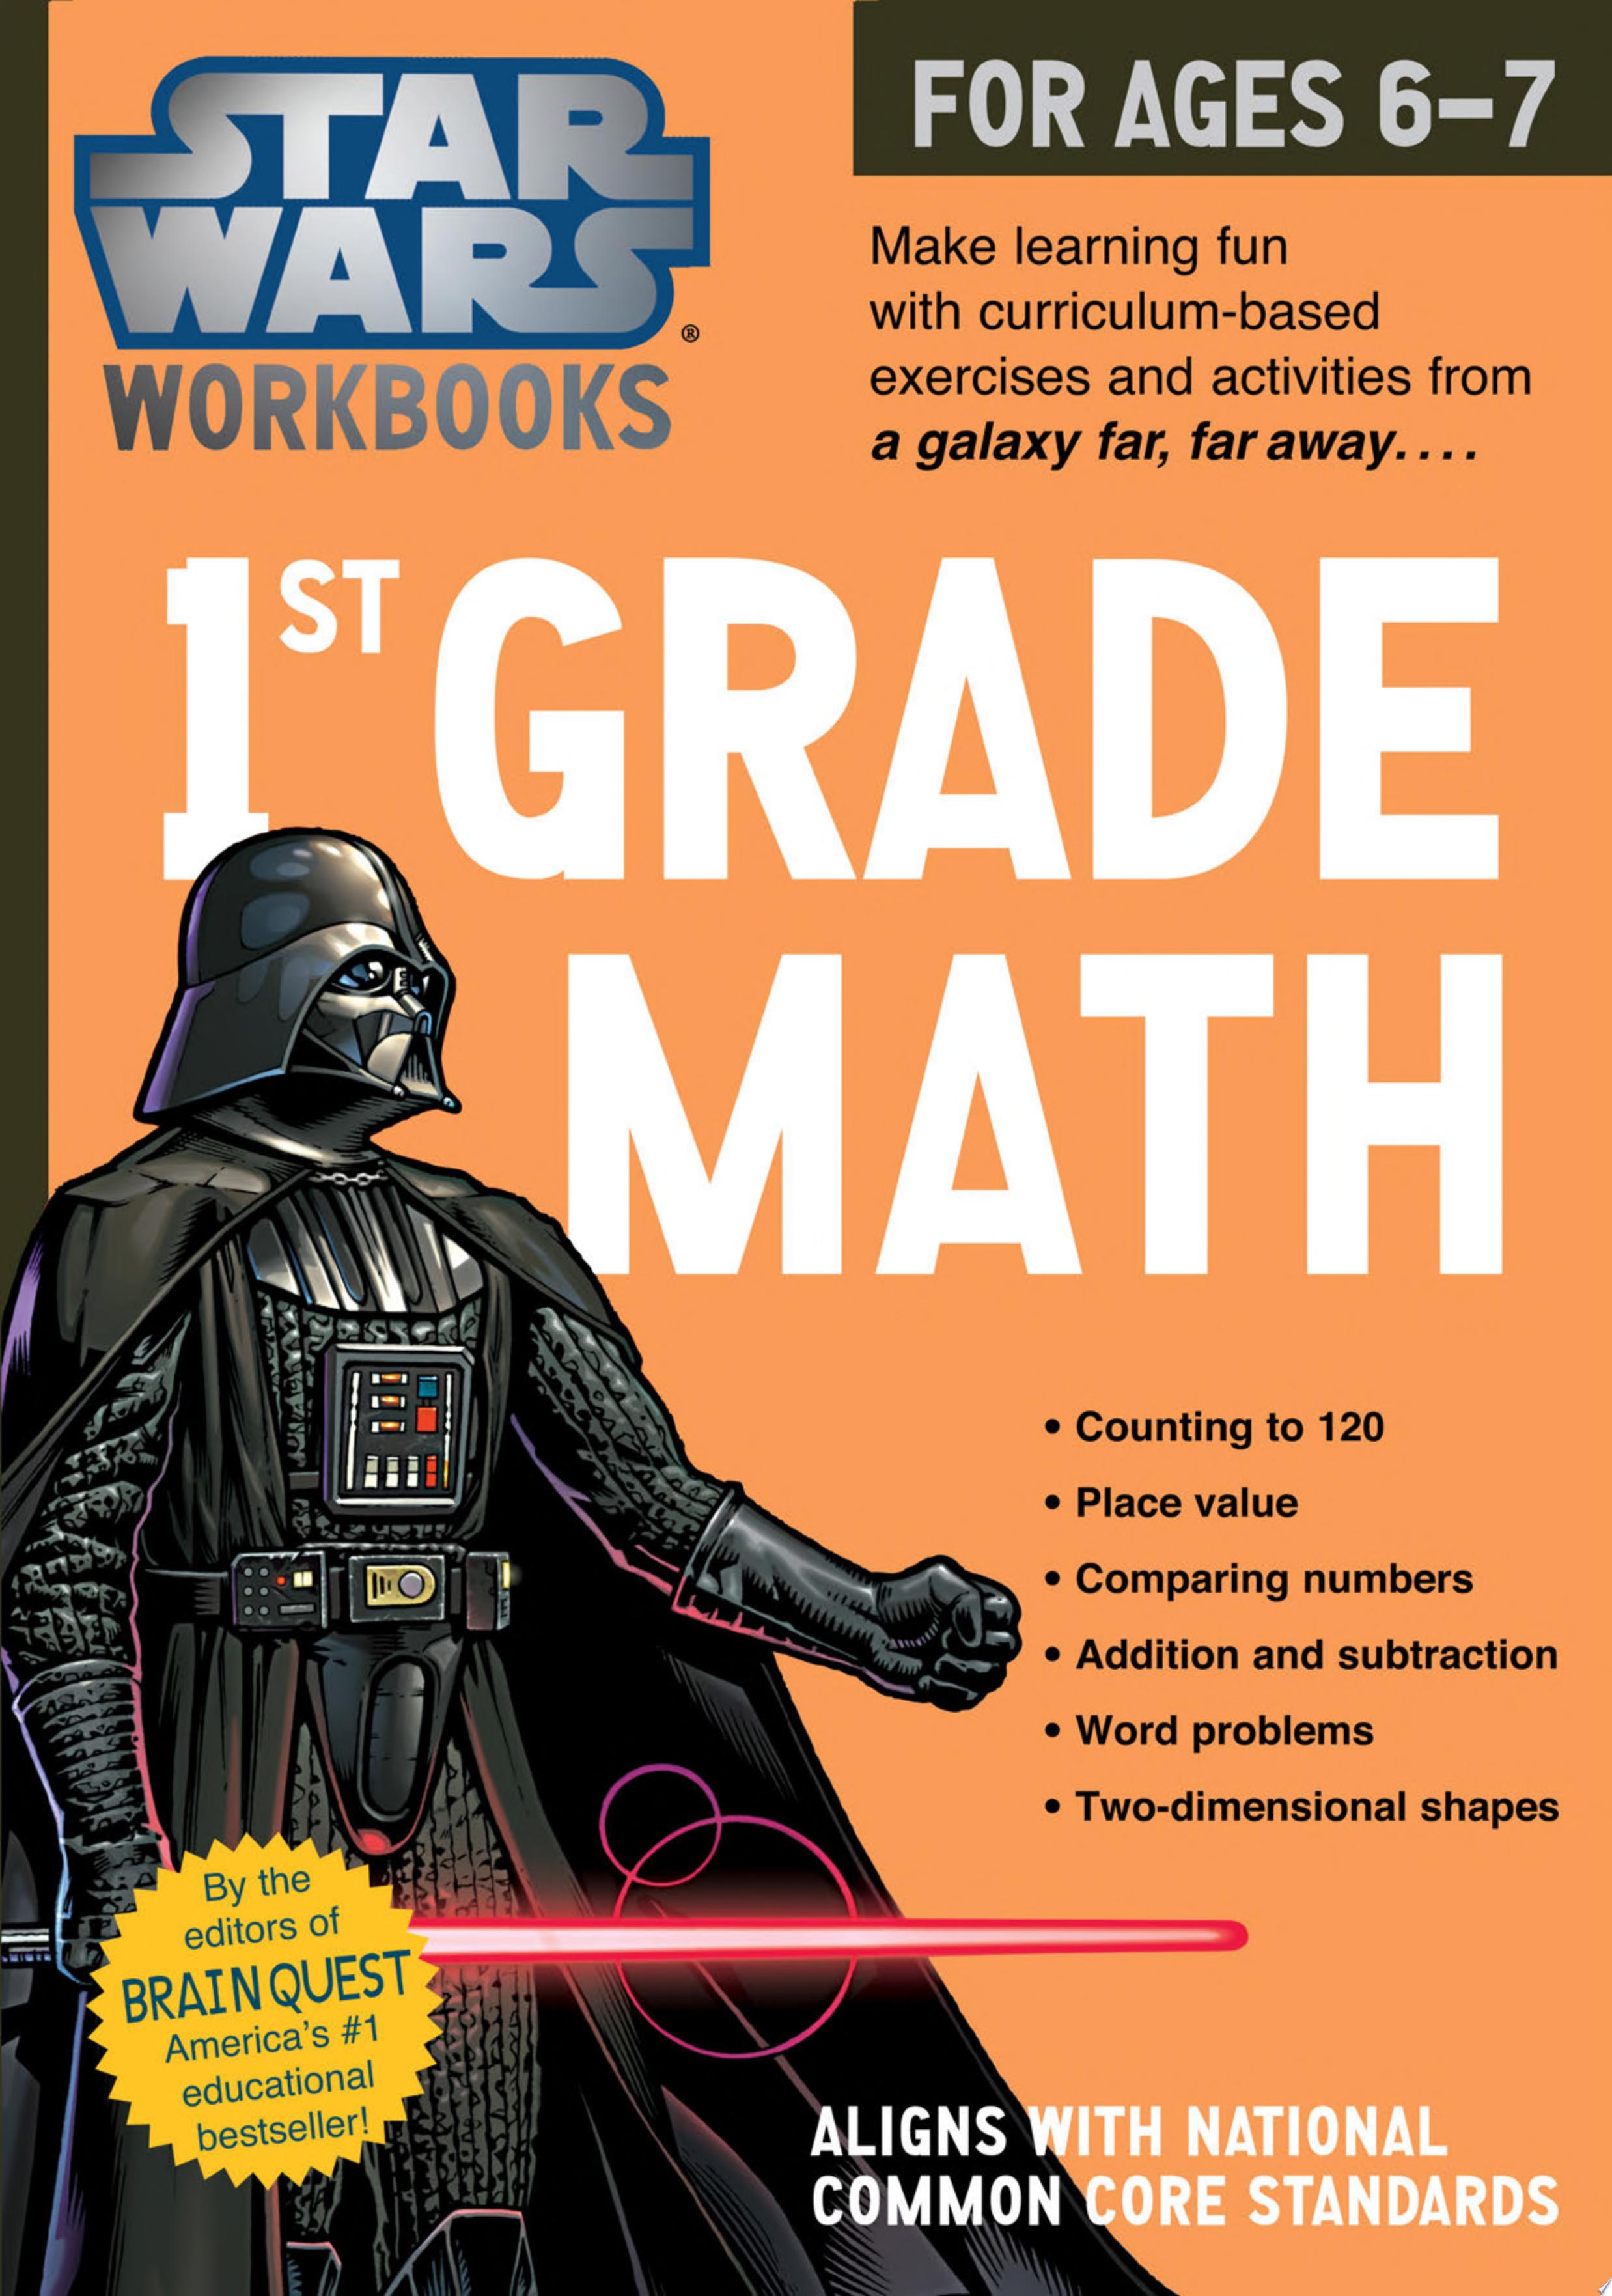 Image for "1st Grade Math"